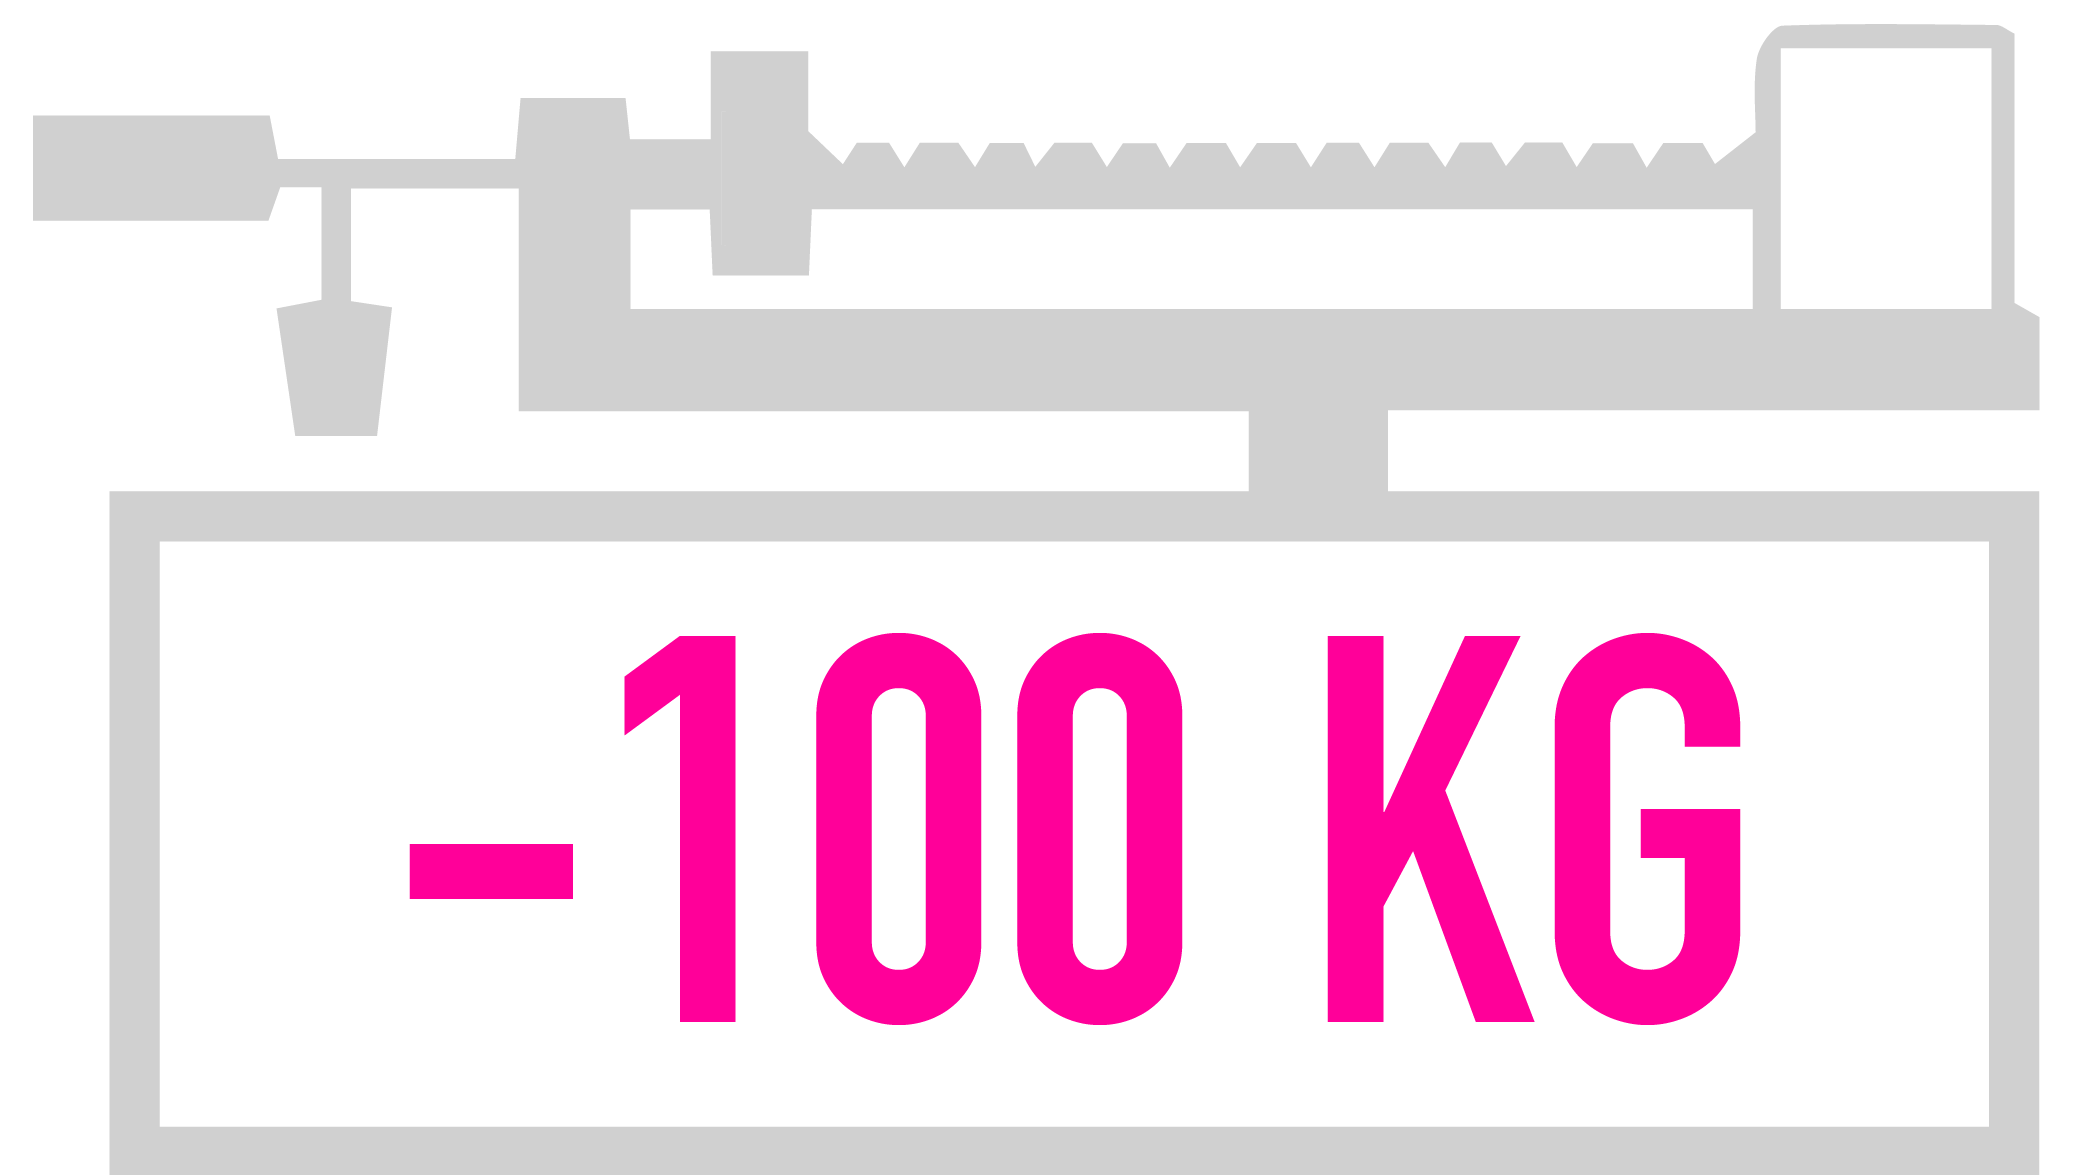  100kg 01